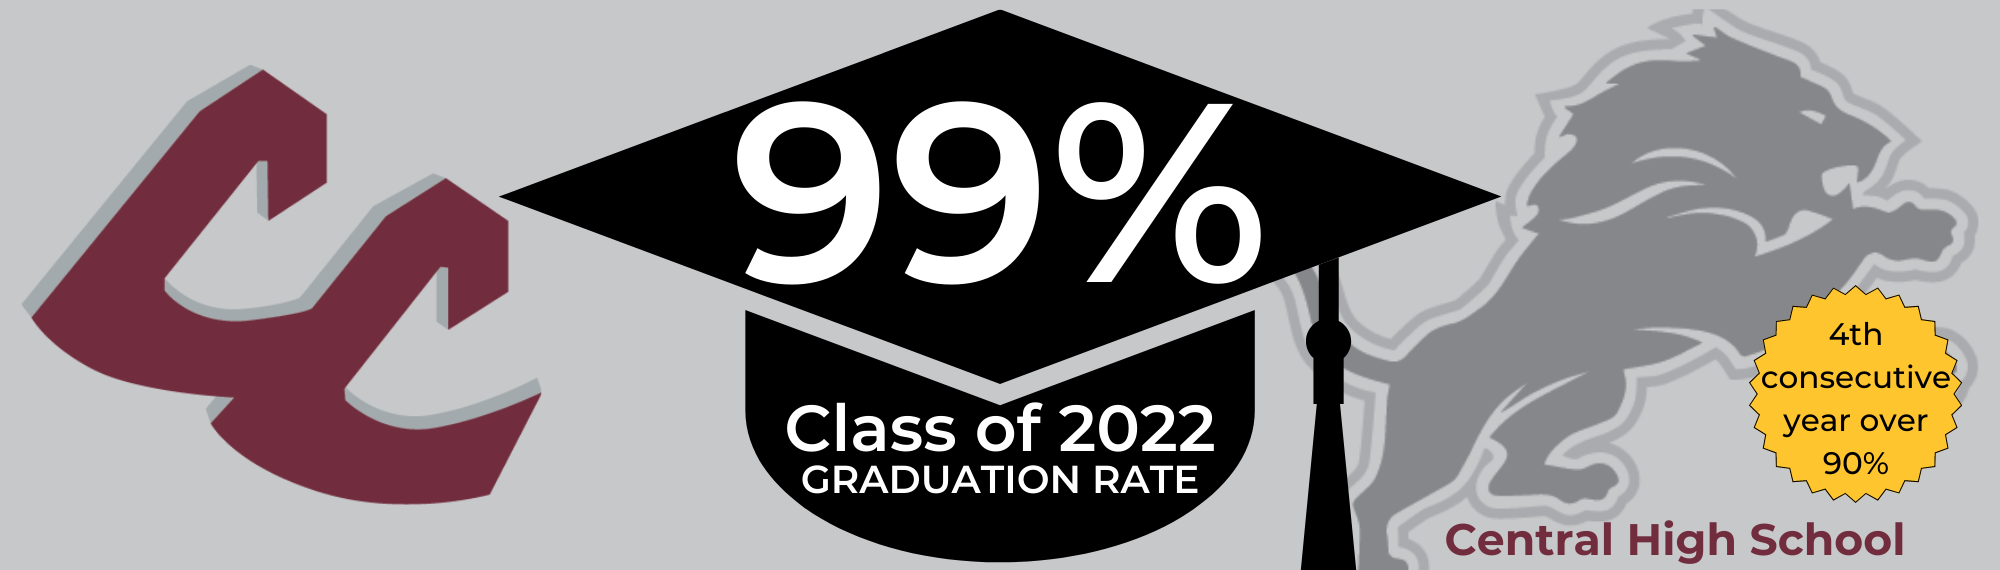 Graduation rate 2022 99%